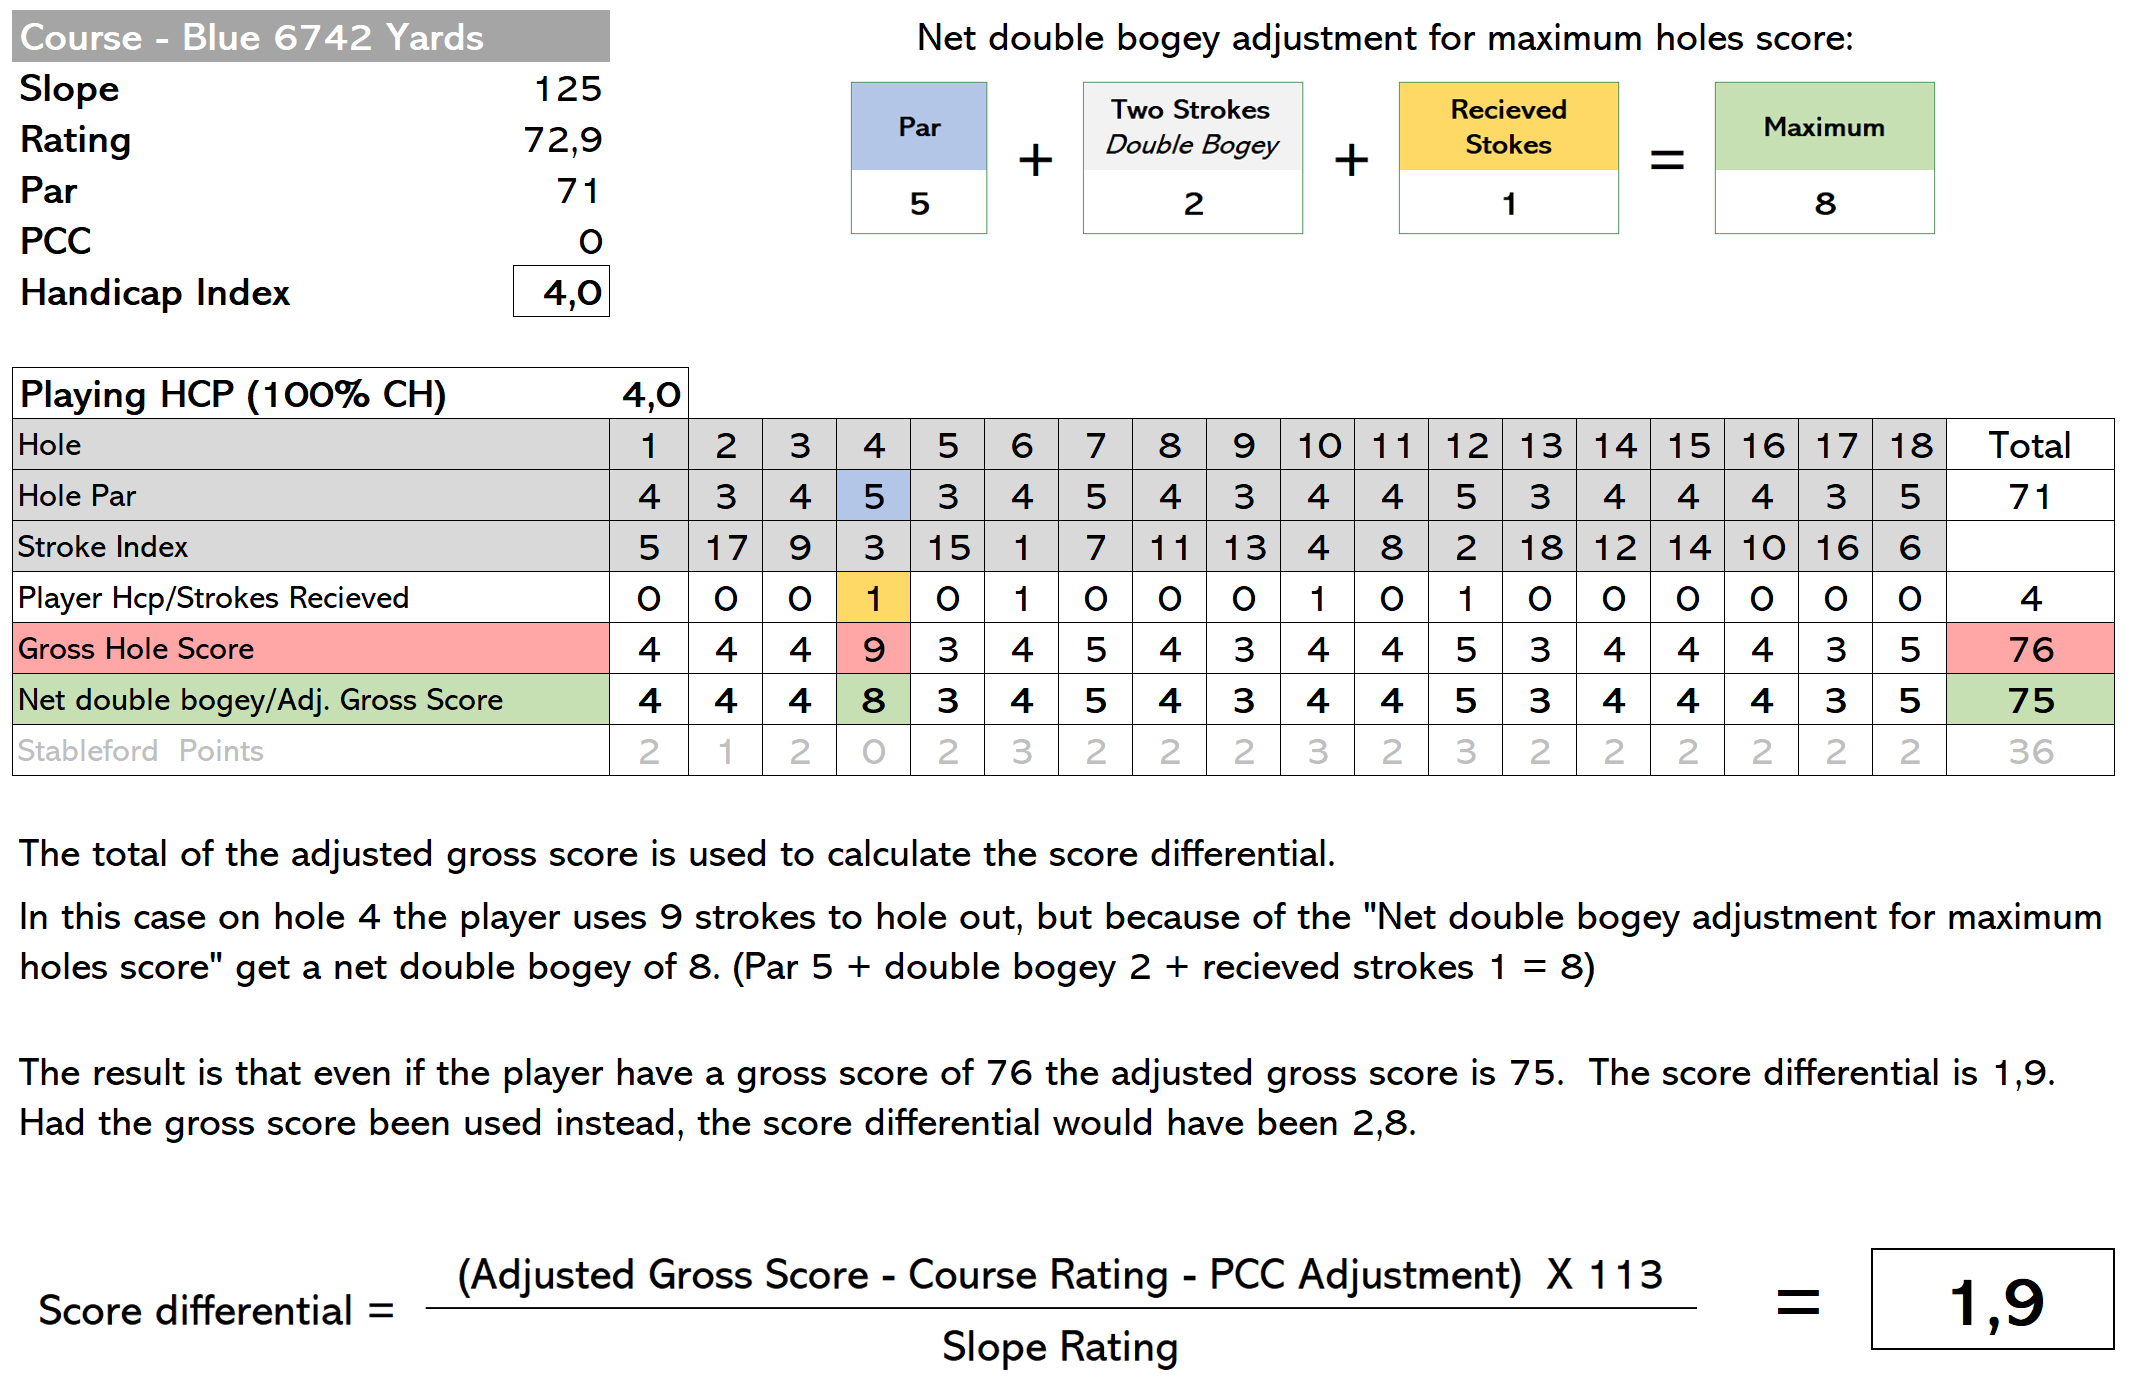 Net double bogey adjustment for maximum holes score